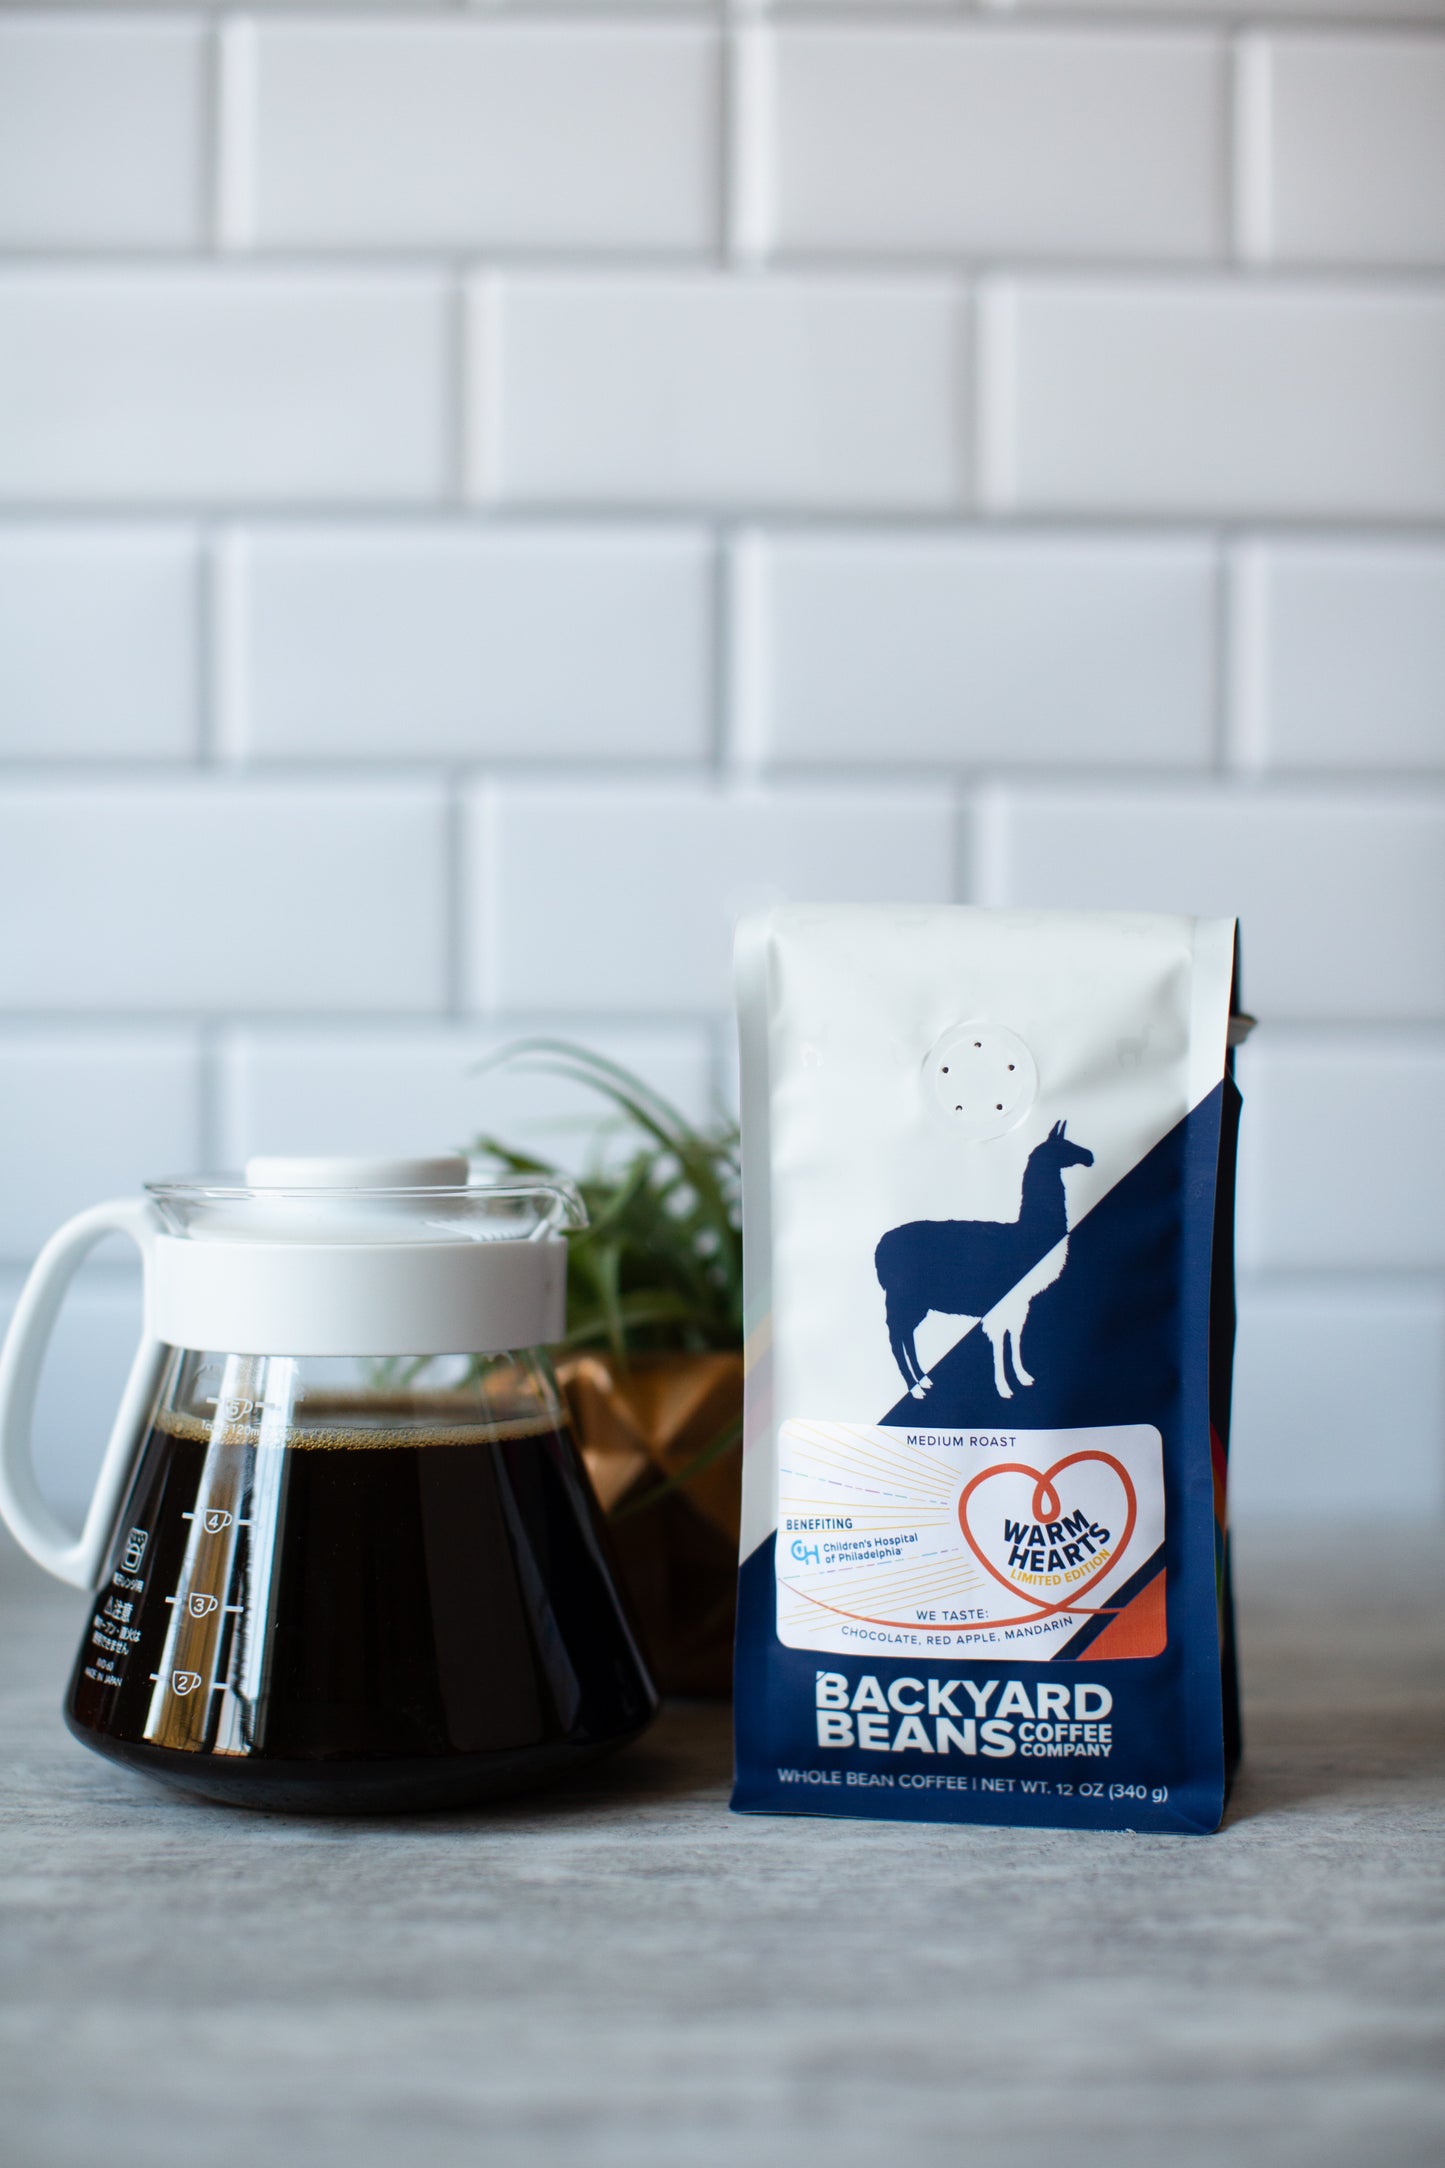 Image of coffee brewed next to Warm Hearts coffee bag.